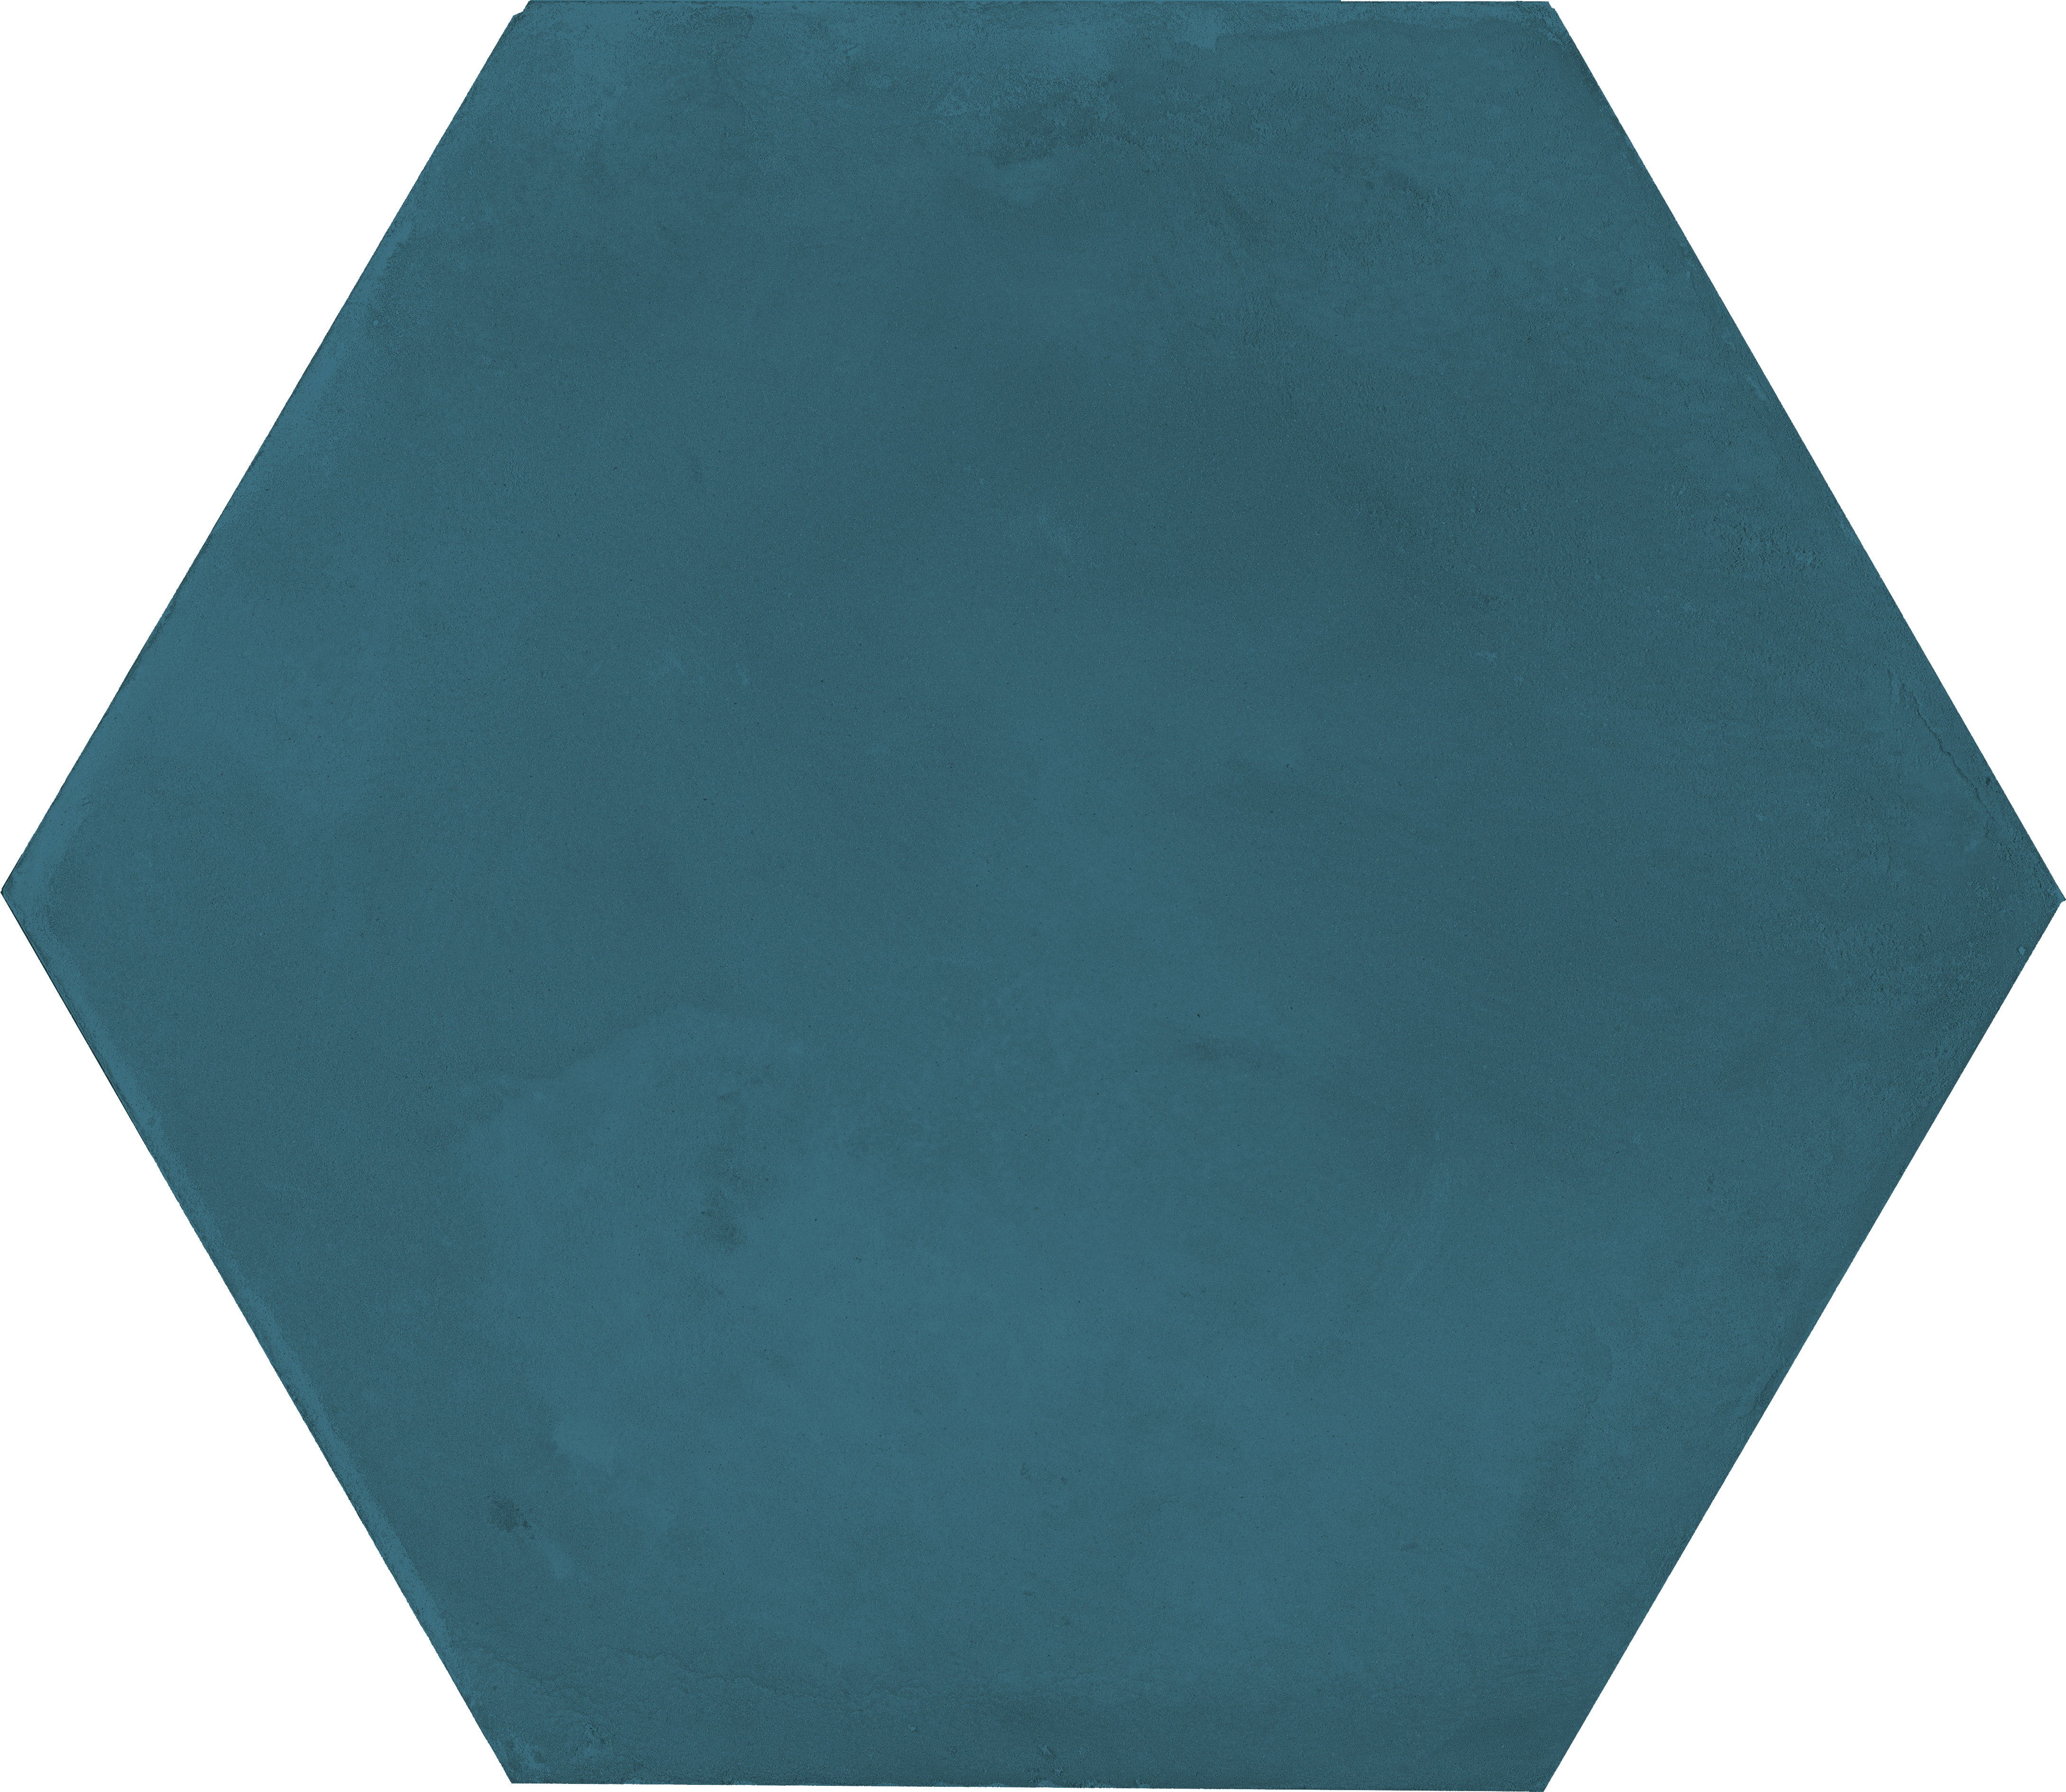 Marcacorona Oceano Naturale – Matt Oceano I406 matt natur 21,6x25cm Esagona 9mm